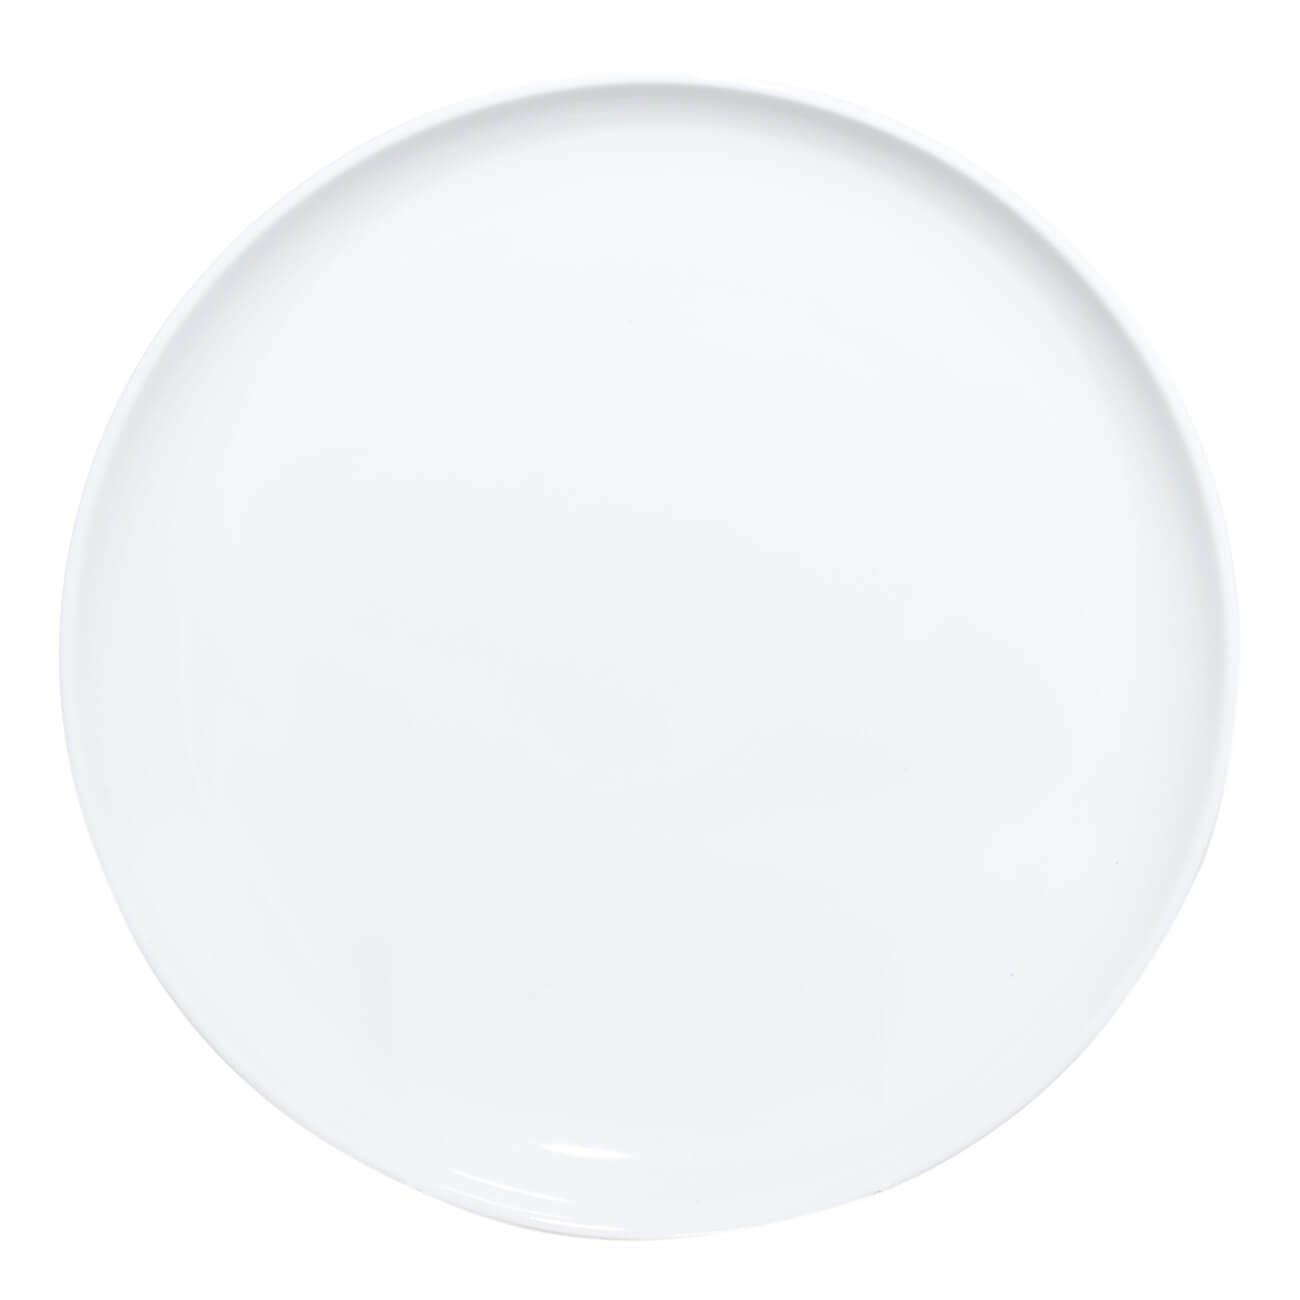 Тарелка обеденная, 25 см, фарфор P, белая, Silence тарелка обеденная 27 см фарфор f белая с золотистым кантом геометрия rodos